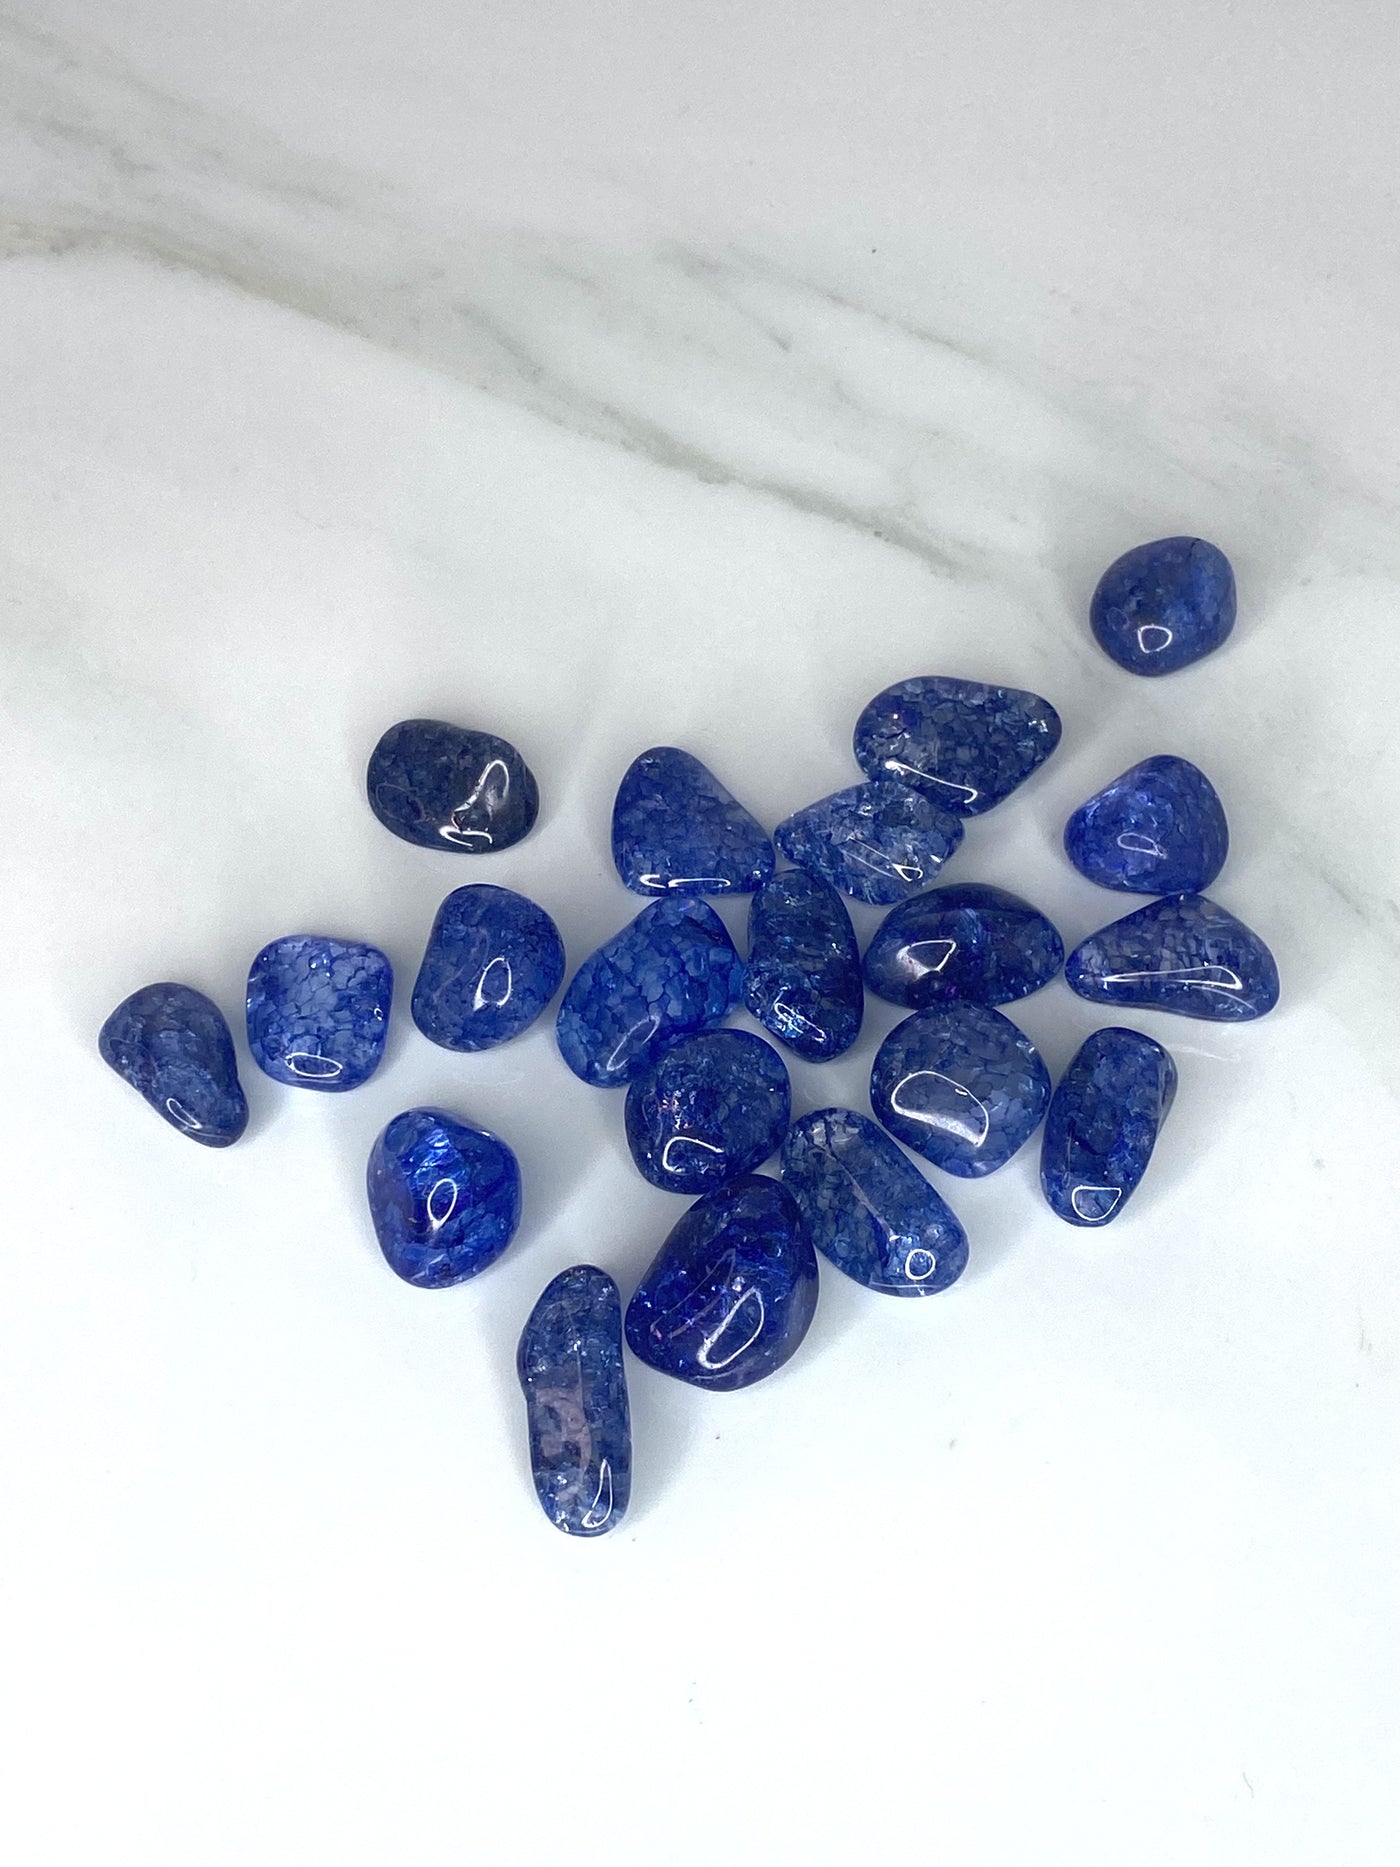 Blue Crackled Quartz - The Stone for Creative Potential